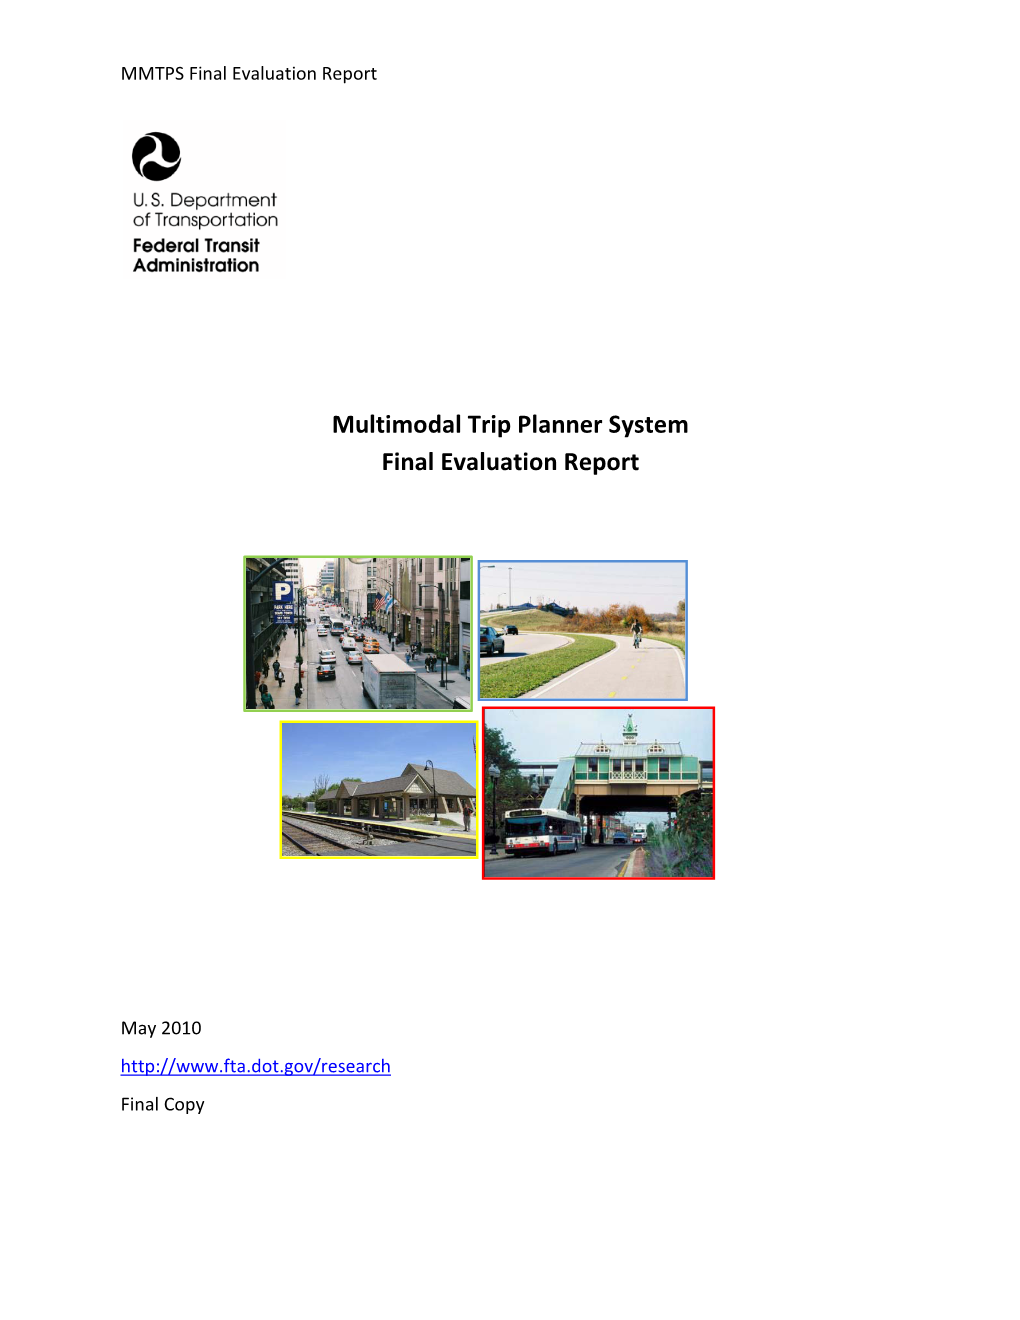 Multimodal Trip Planner System Final Evaluation Report